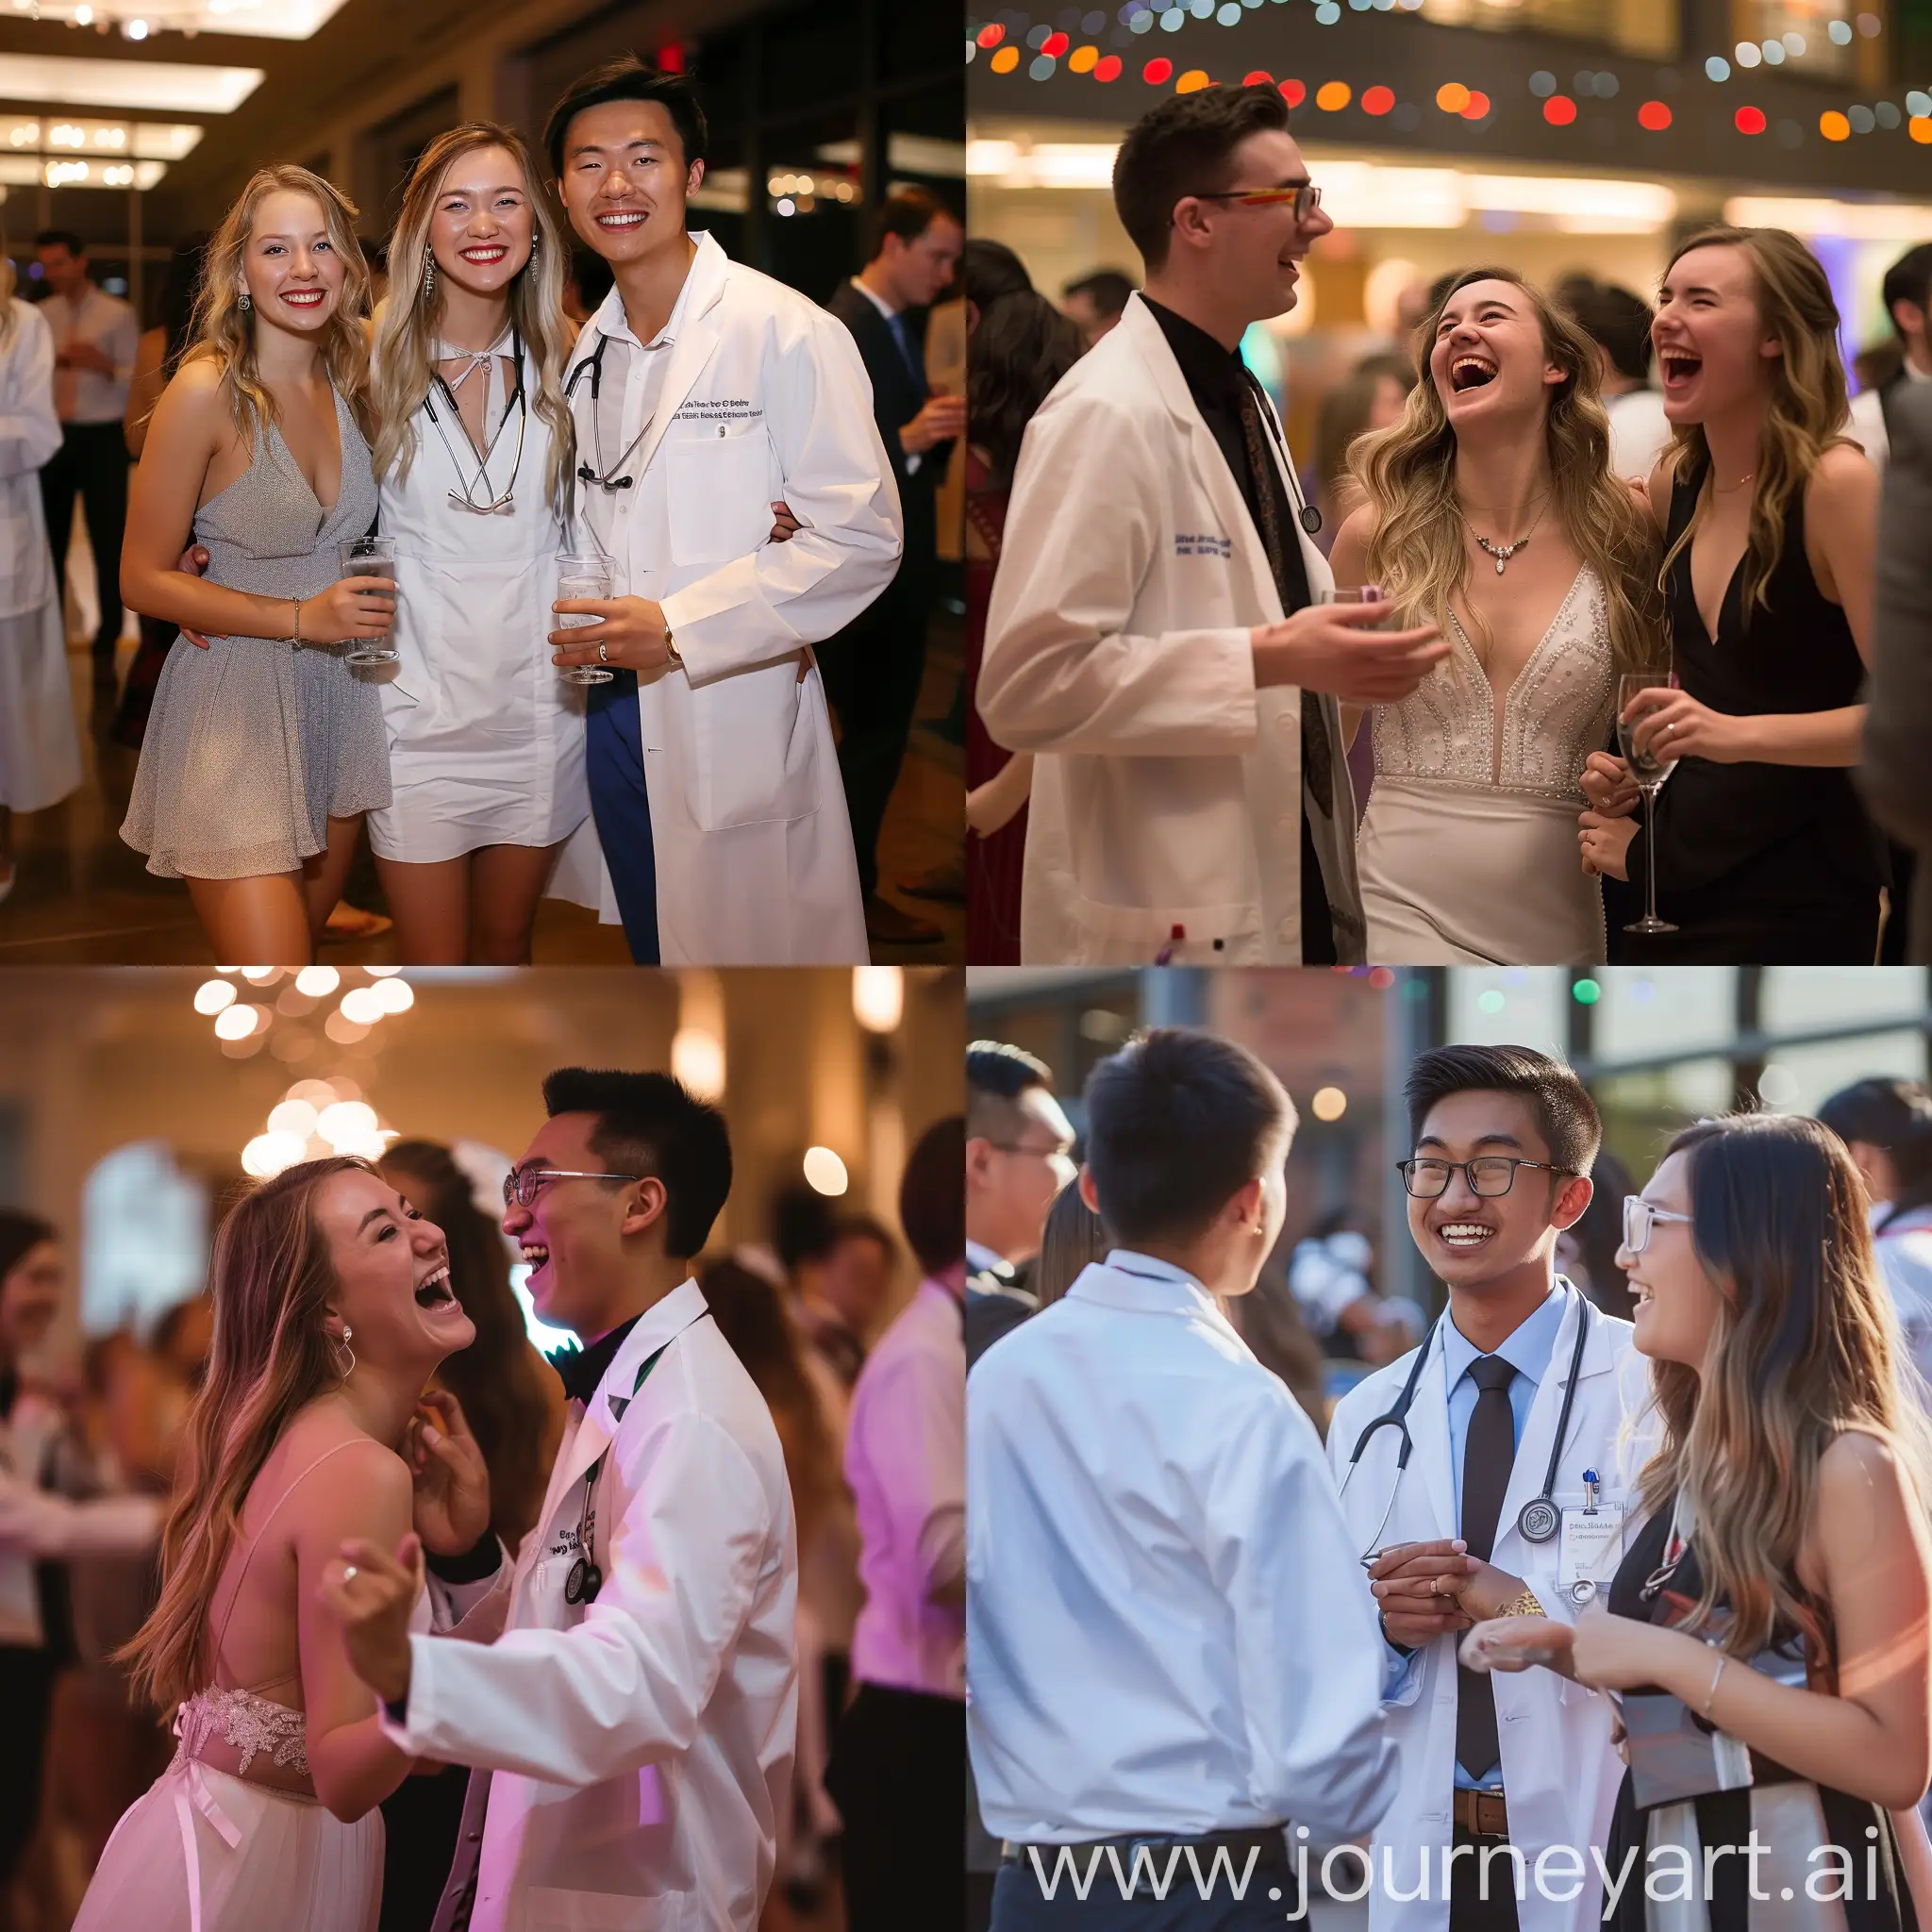 medical students having fun at the prom